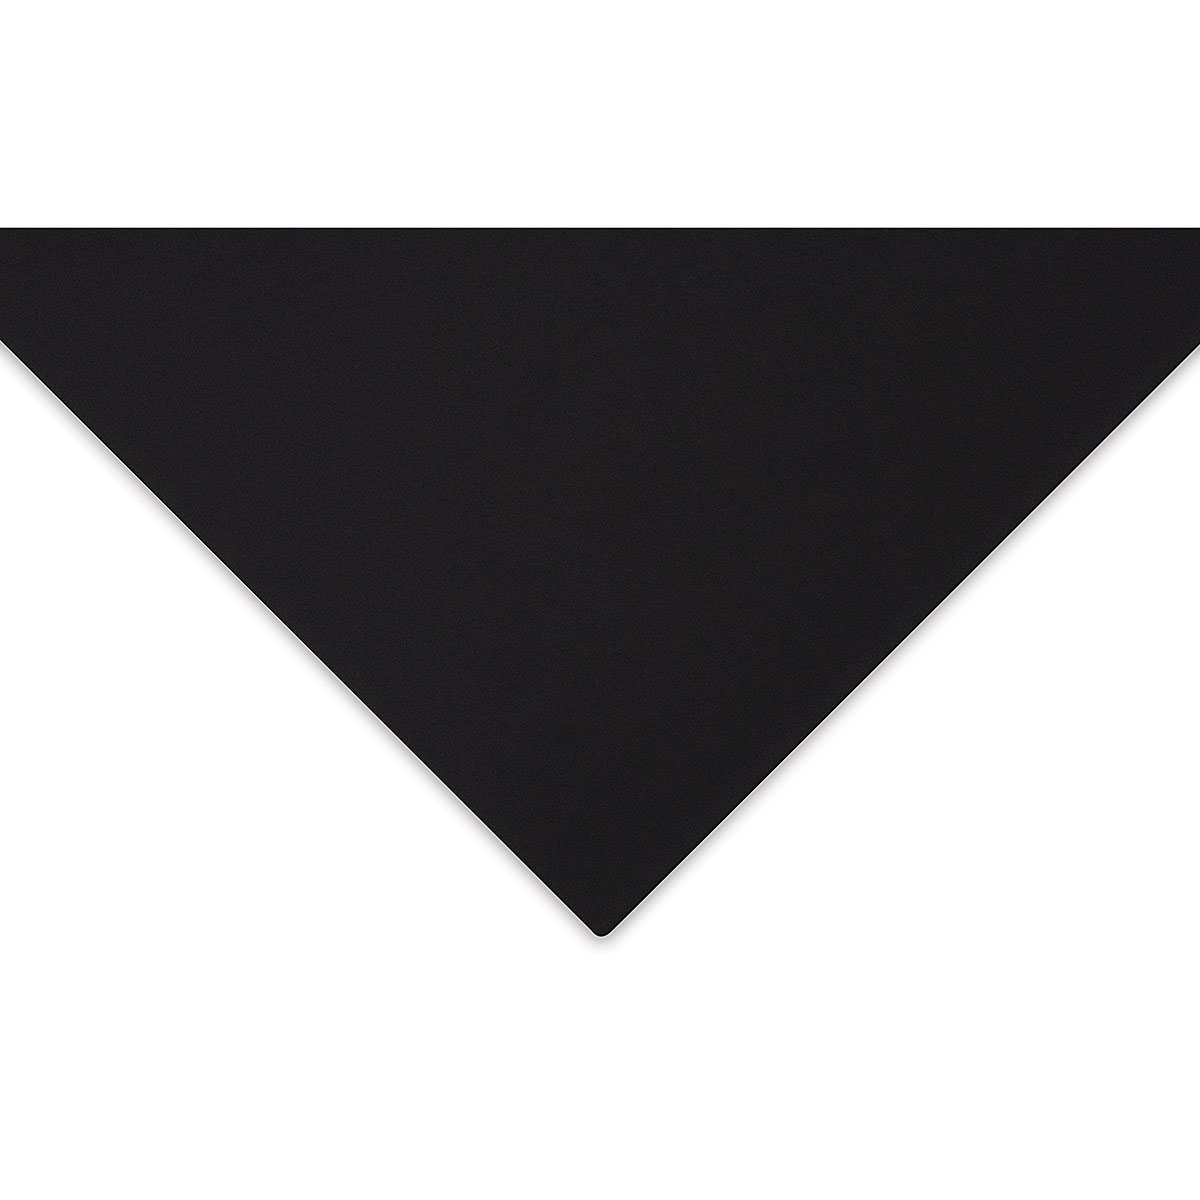 Fabriano Black Black Drawing Pad - 9 x 12